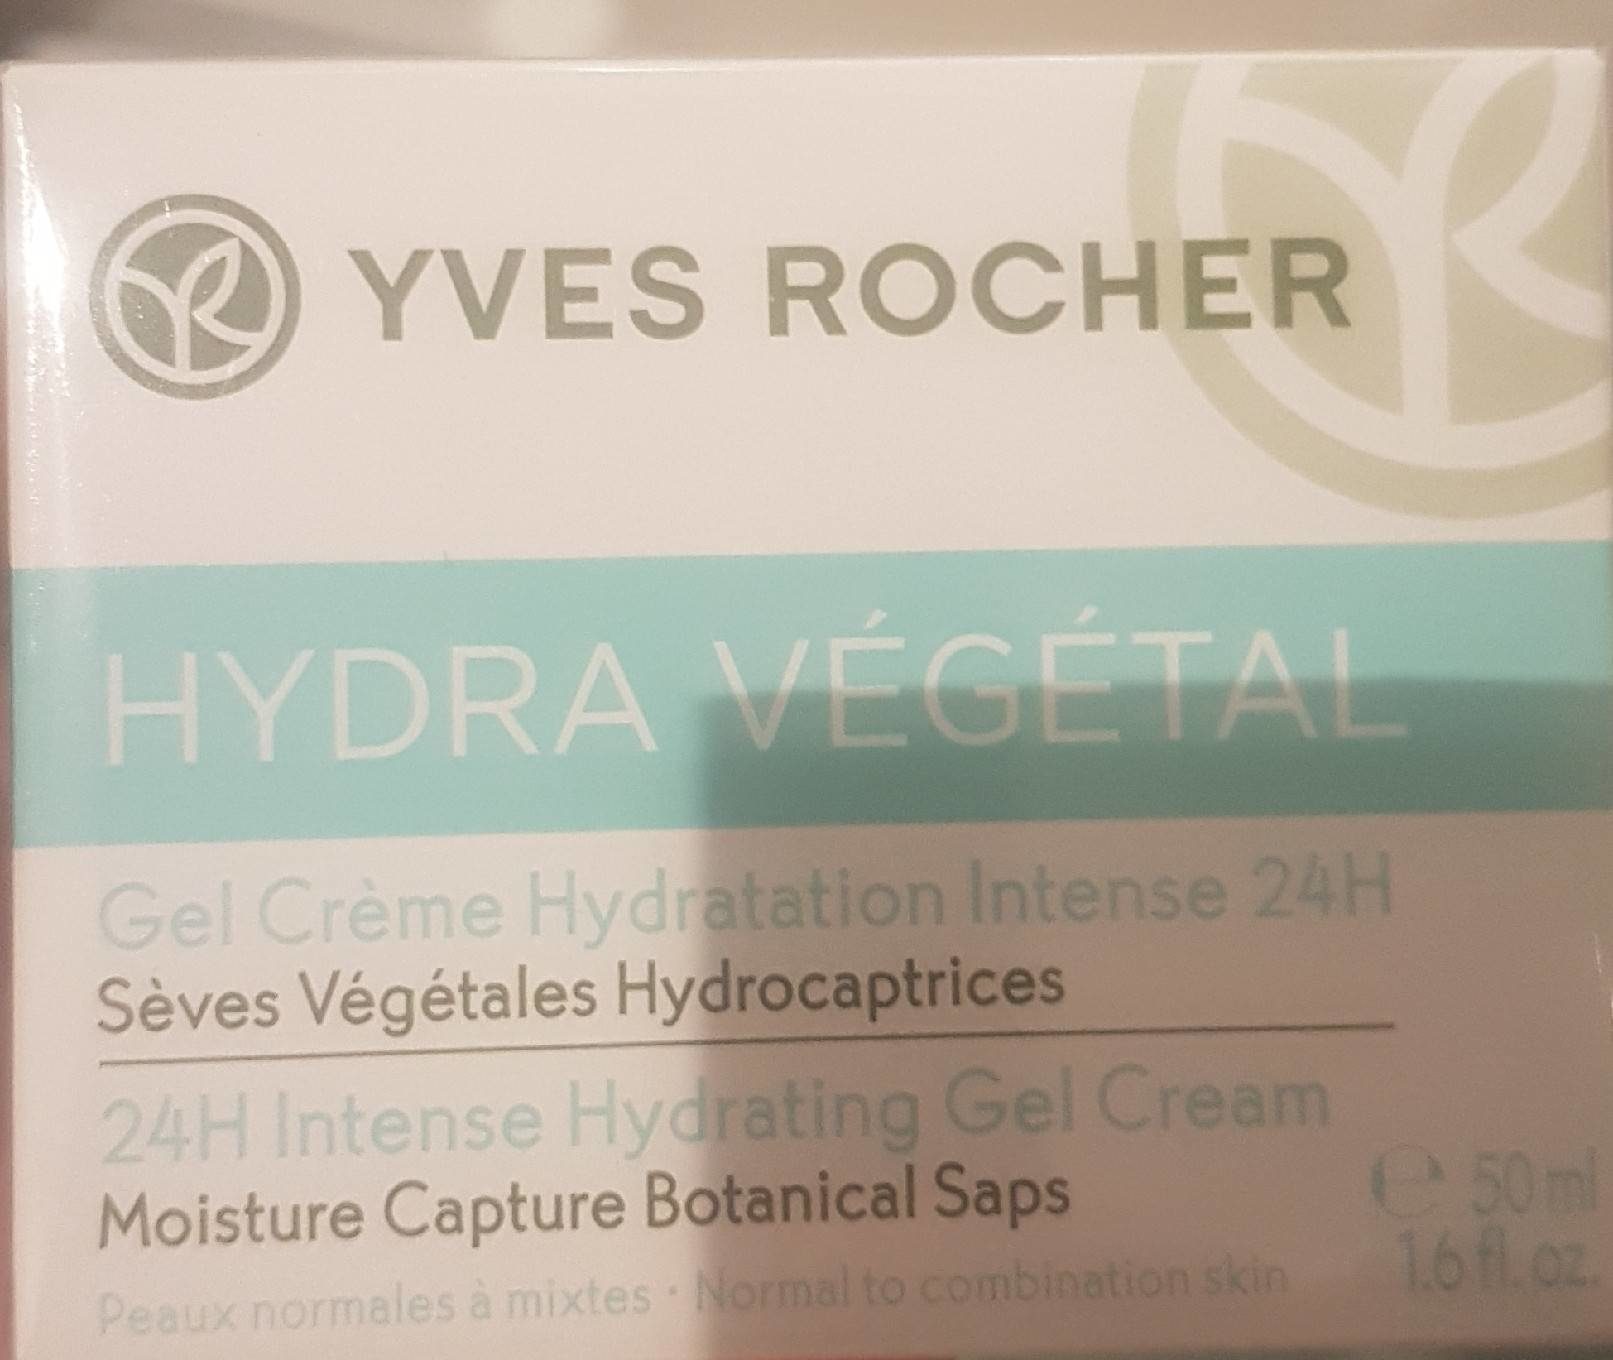 Yves Rocher Hydra Vegetal Creme Hydrating Gel Cream - Produto - fr